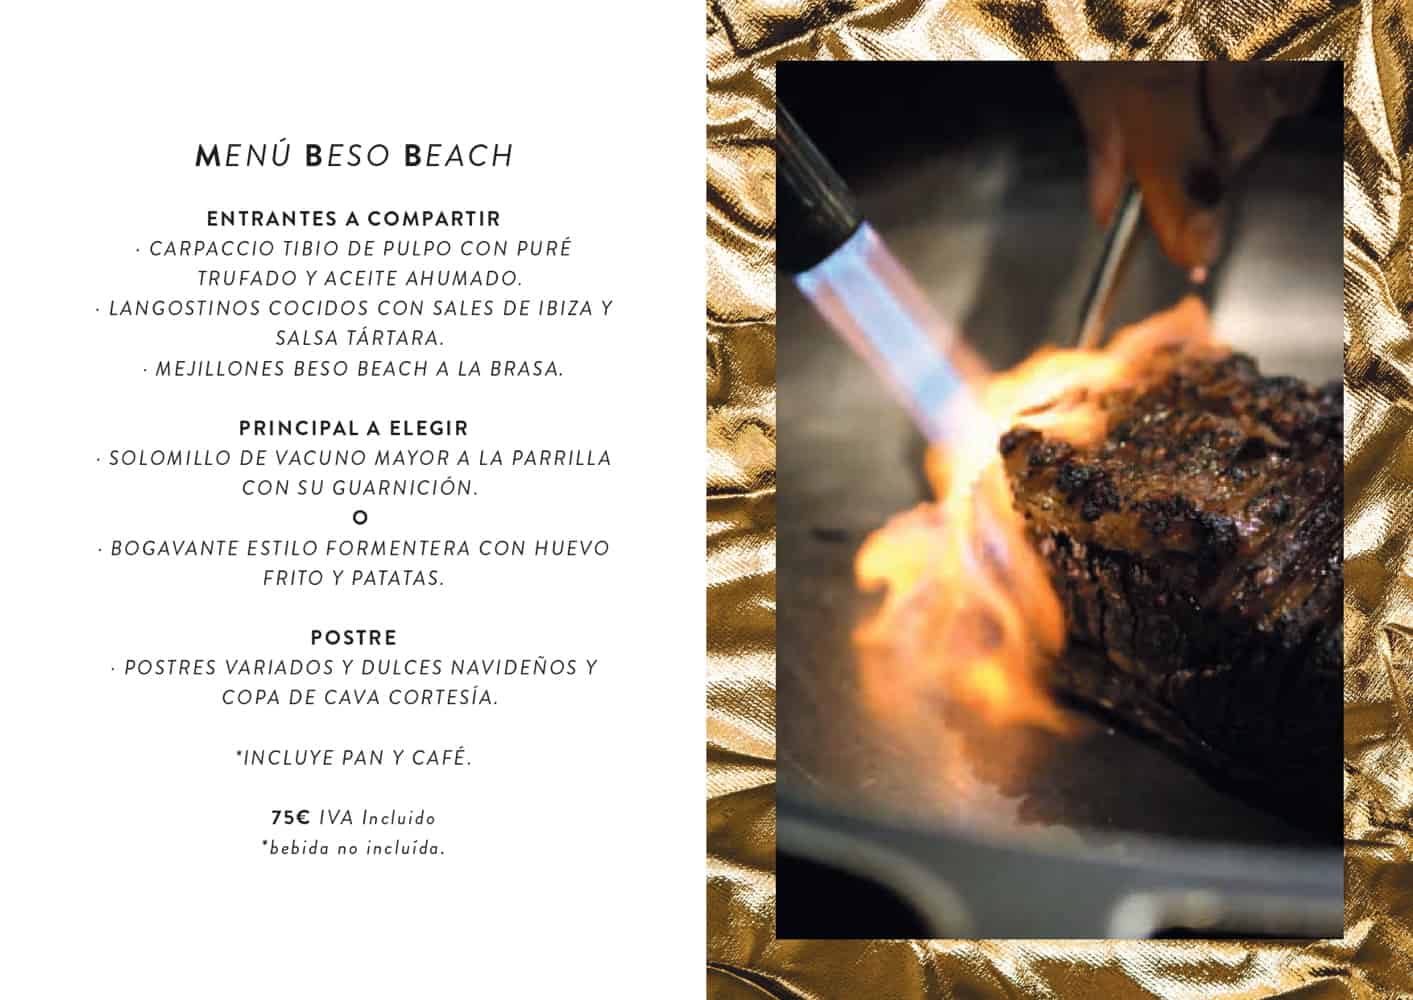 Menús para grupos en Ibiza: Beso Beach- menus grupo ibiza beso beach 2021 01